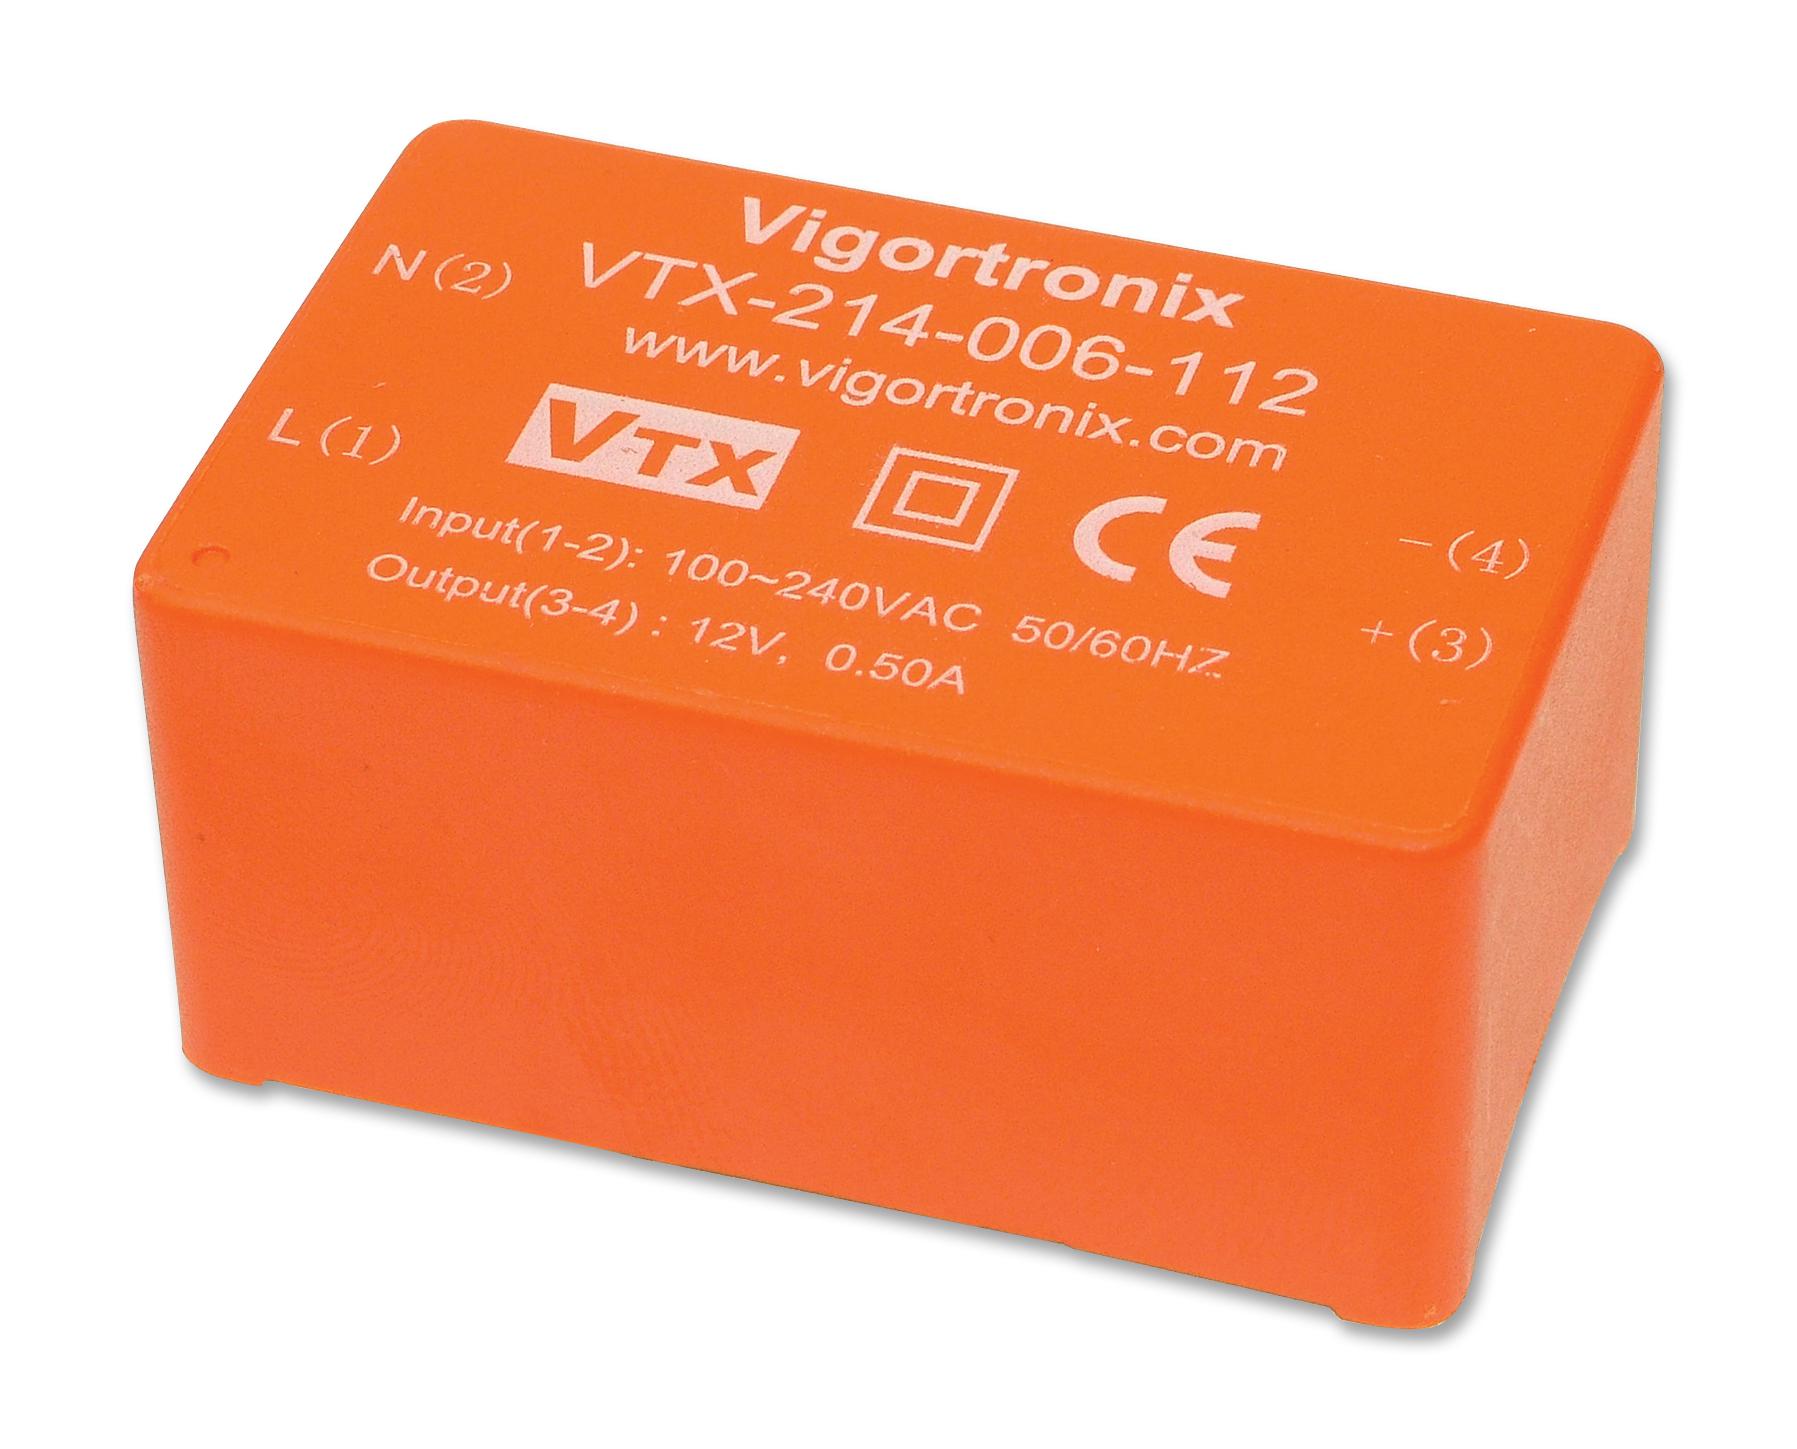 VTX-214-006-115 POWER SUPPLY, AC-DC, 15V, 0.4A VIGORTRONIX